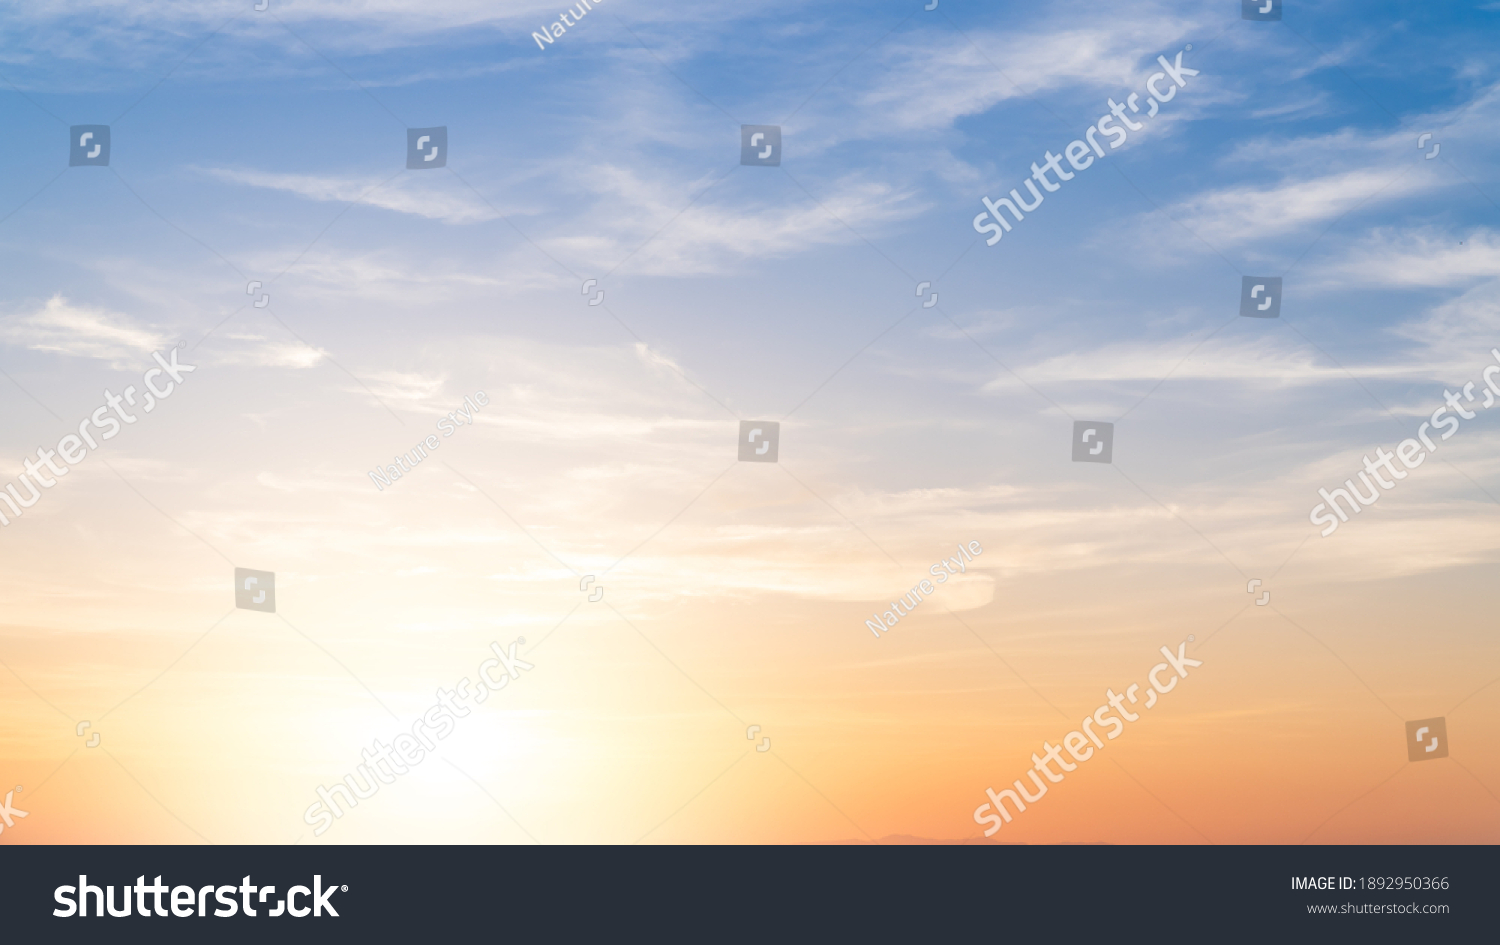 Sunset Sky, Morning Sunrise with colorful Yellow, Orange Sunrise on blue white Cloud, Golden hour Romantic Summer Sky Background  #1892950366